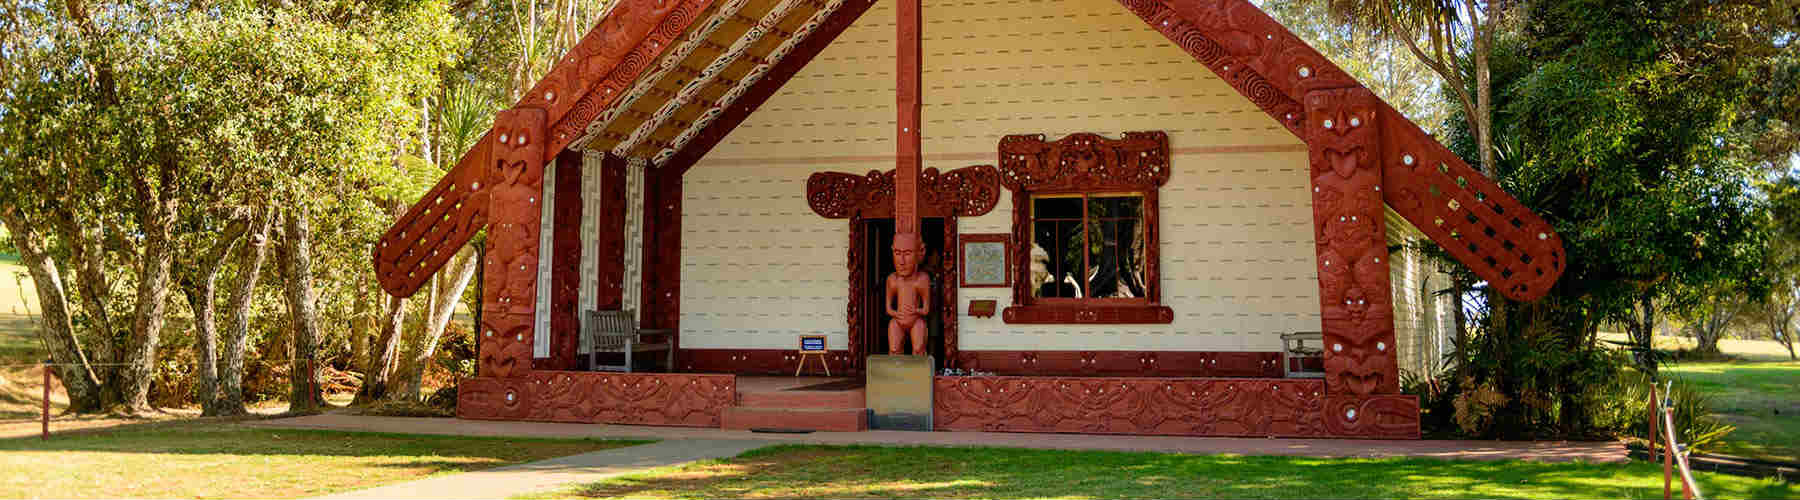 Waitangi Bay of Islands